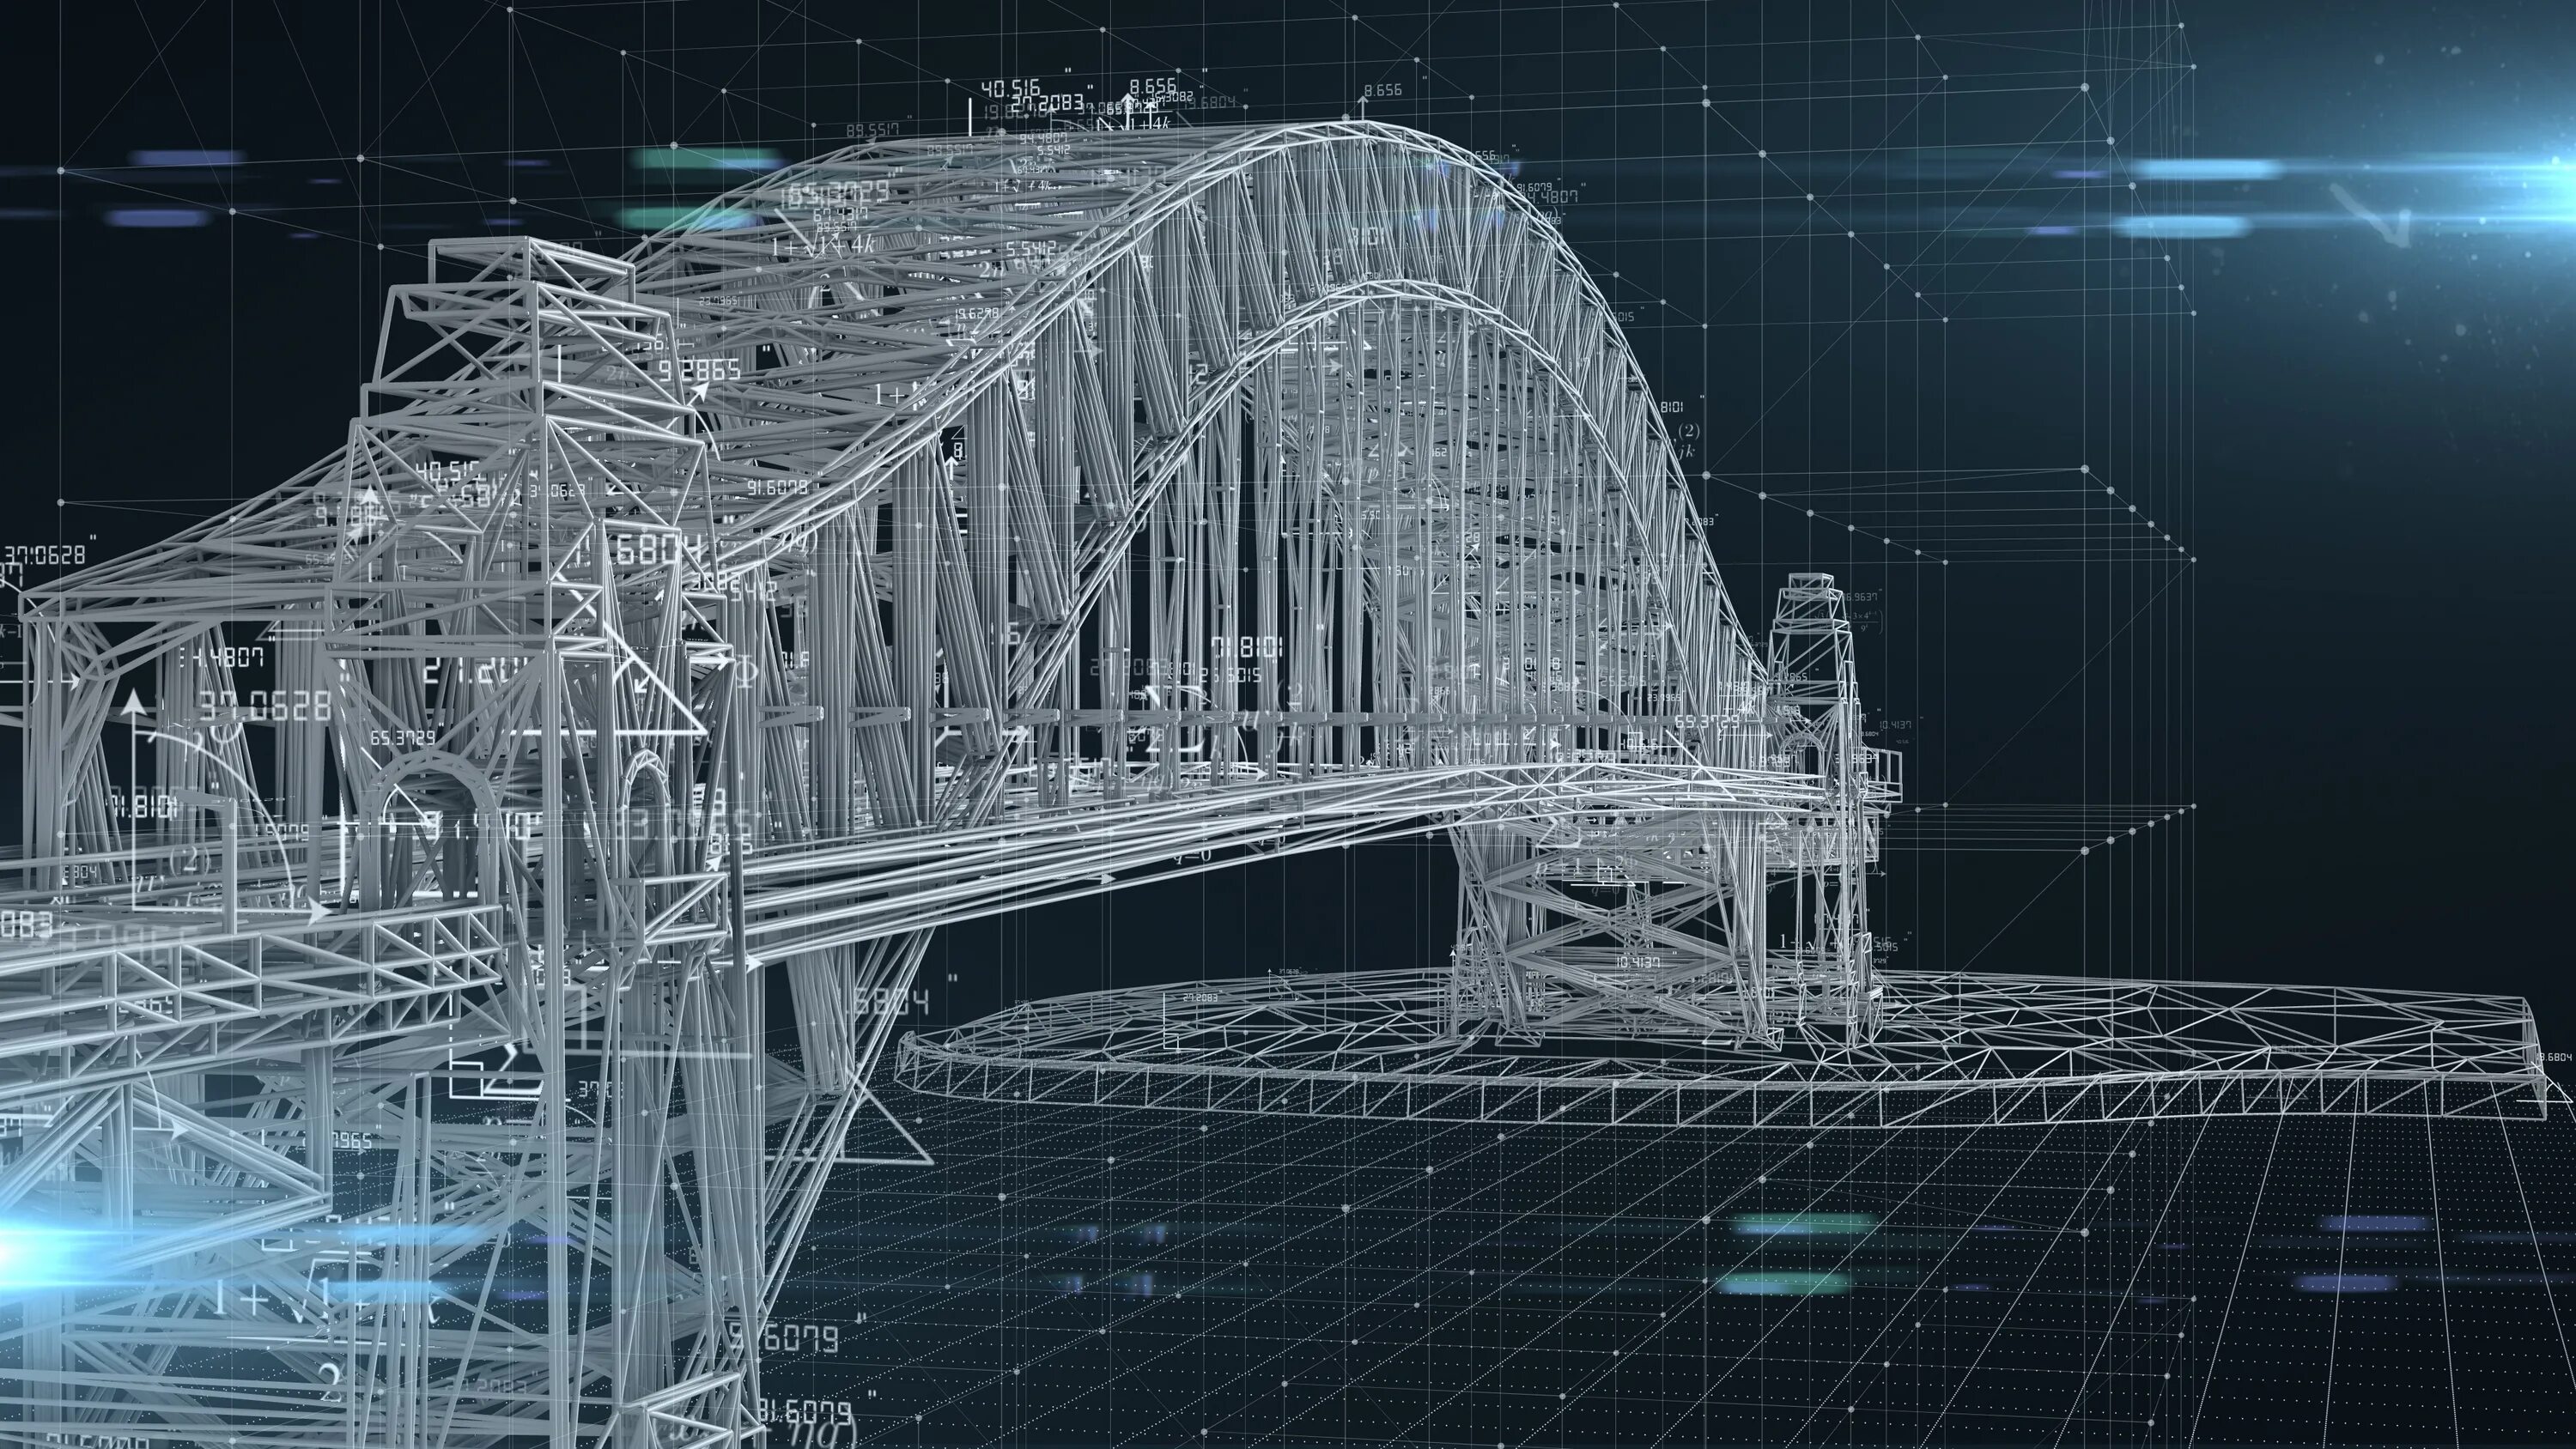 Civil Engineering structures. Техника мост. Строительство в 3-d формате. 3d Printing Civil Engineering.